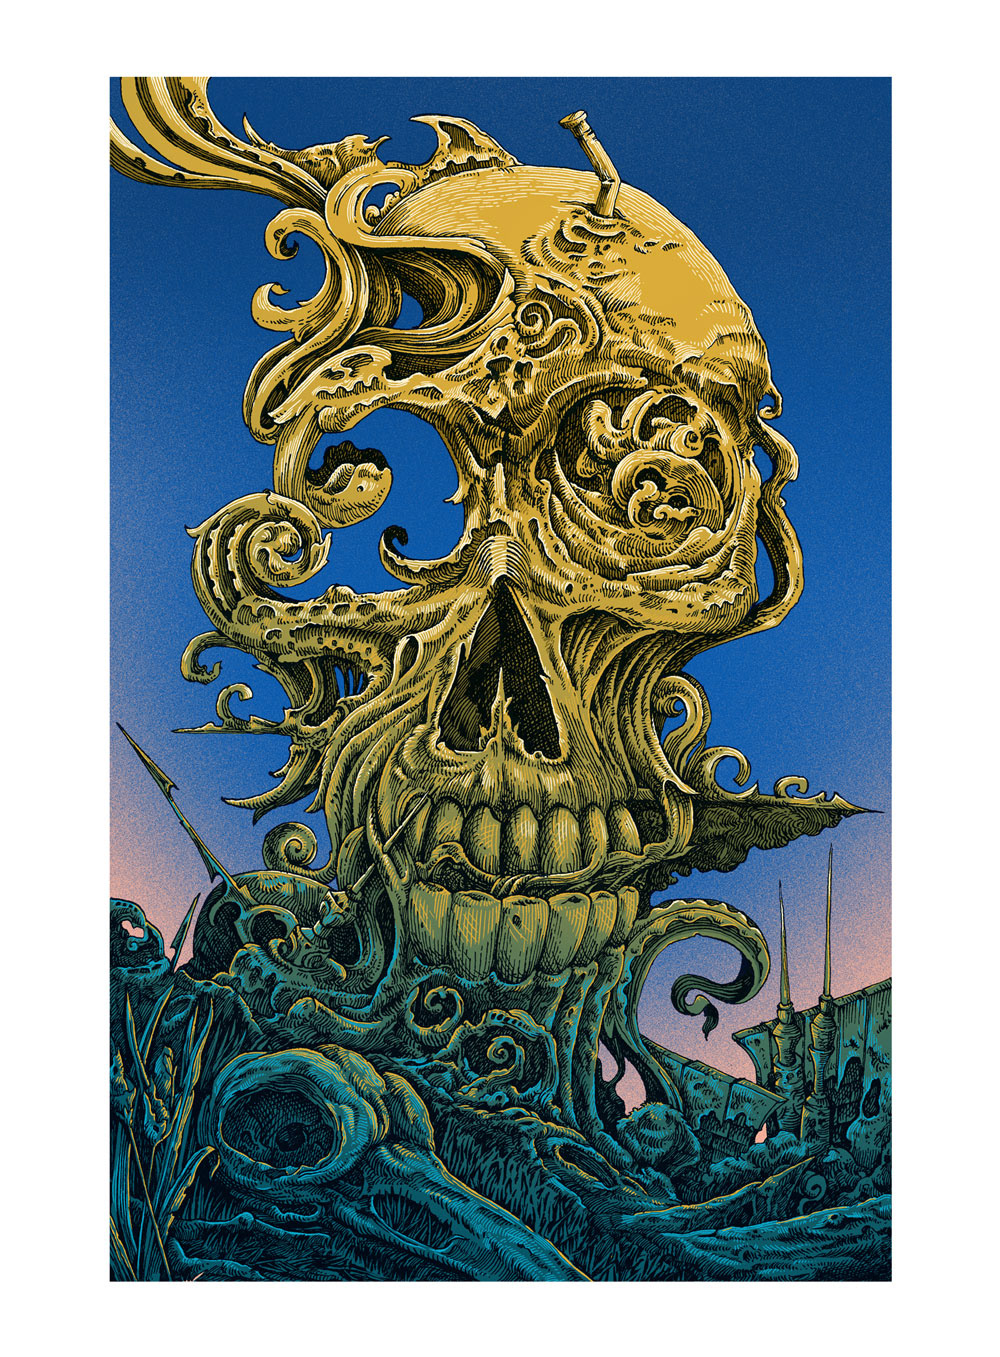 skull 1980s sci-fi science fiction Landscape candy color inprnt art print poster #rafbanzuela